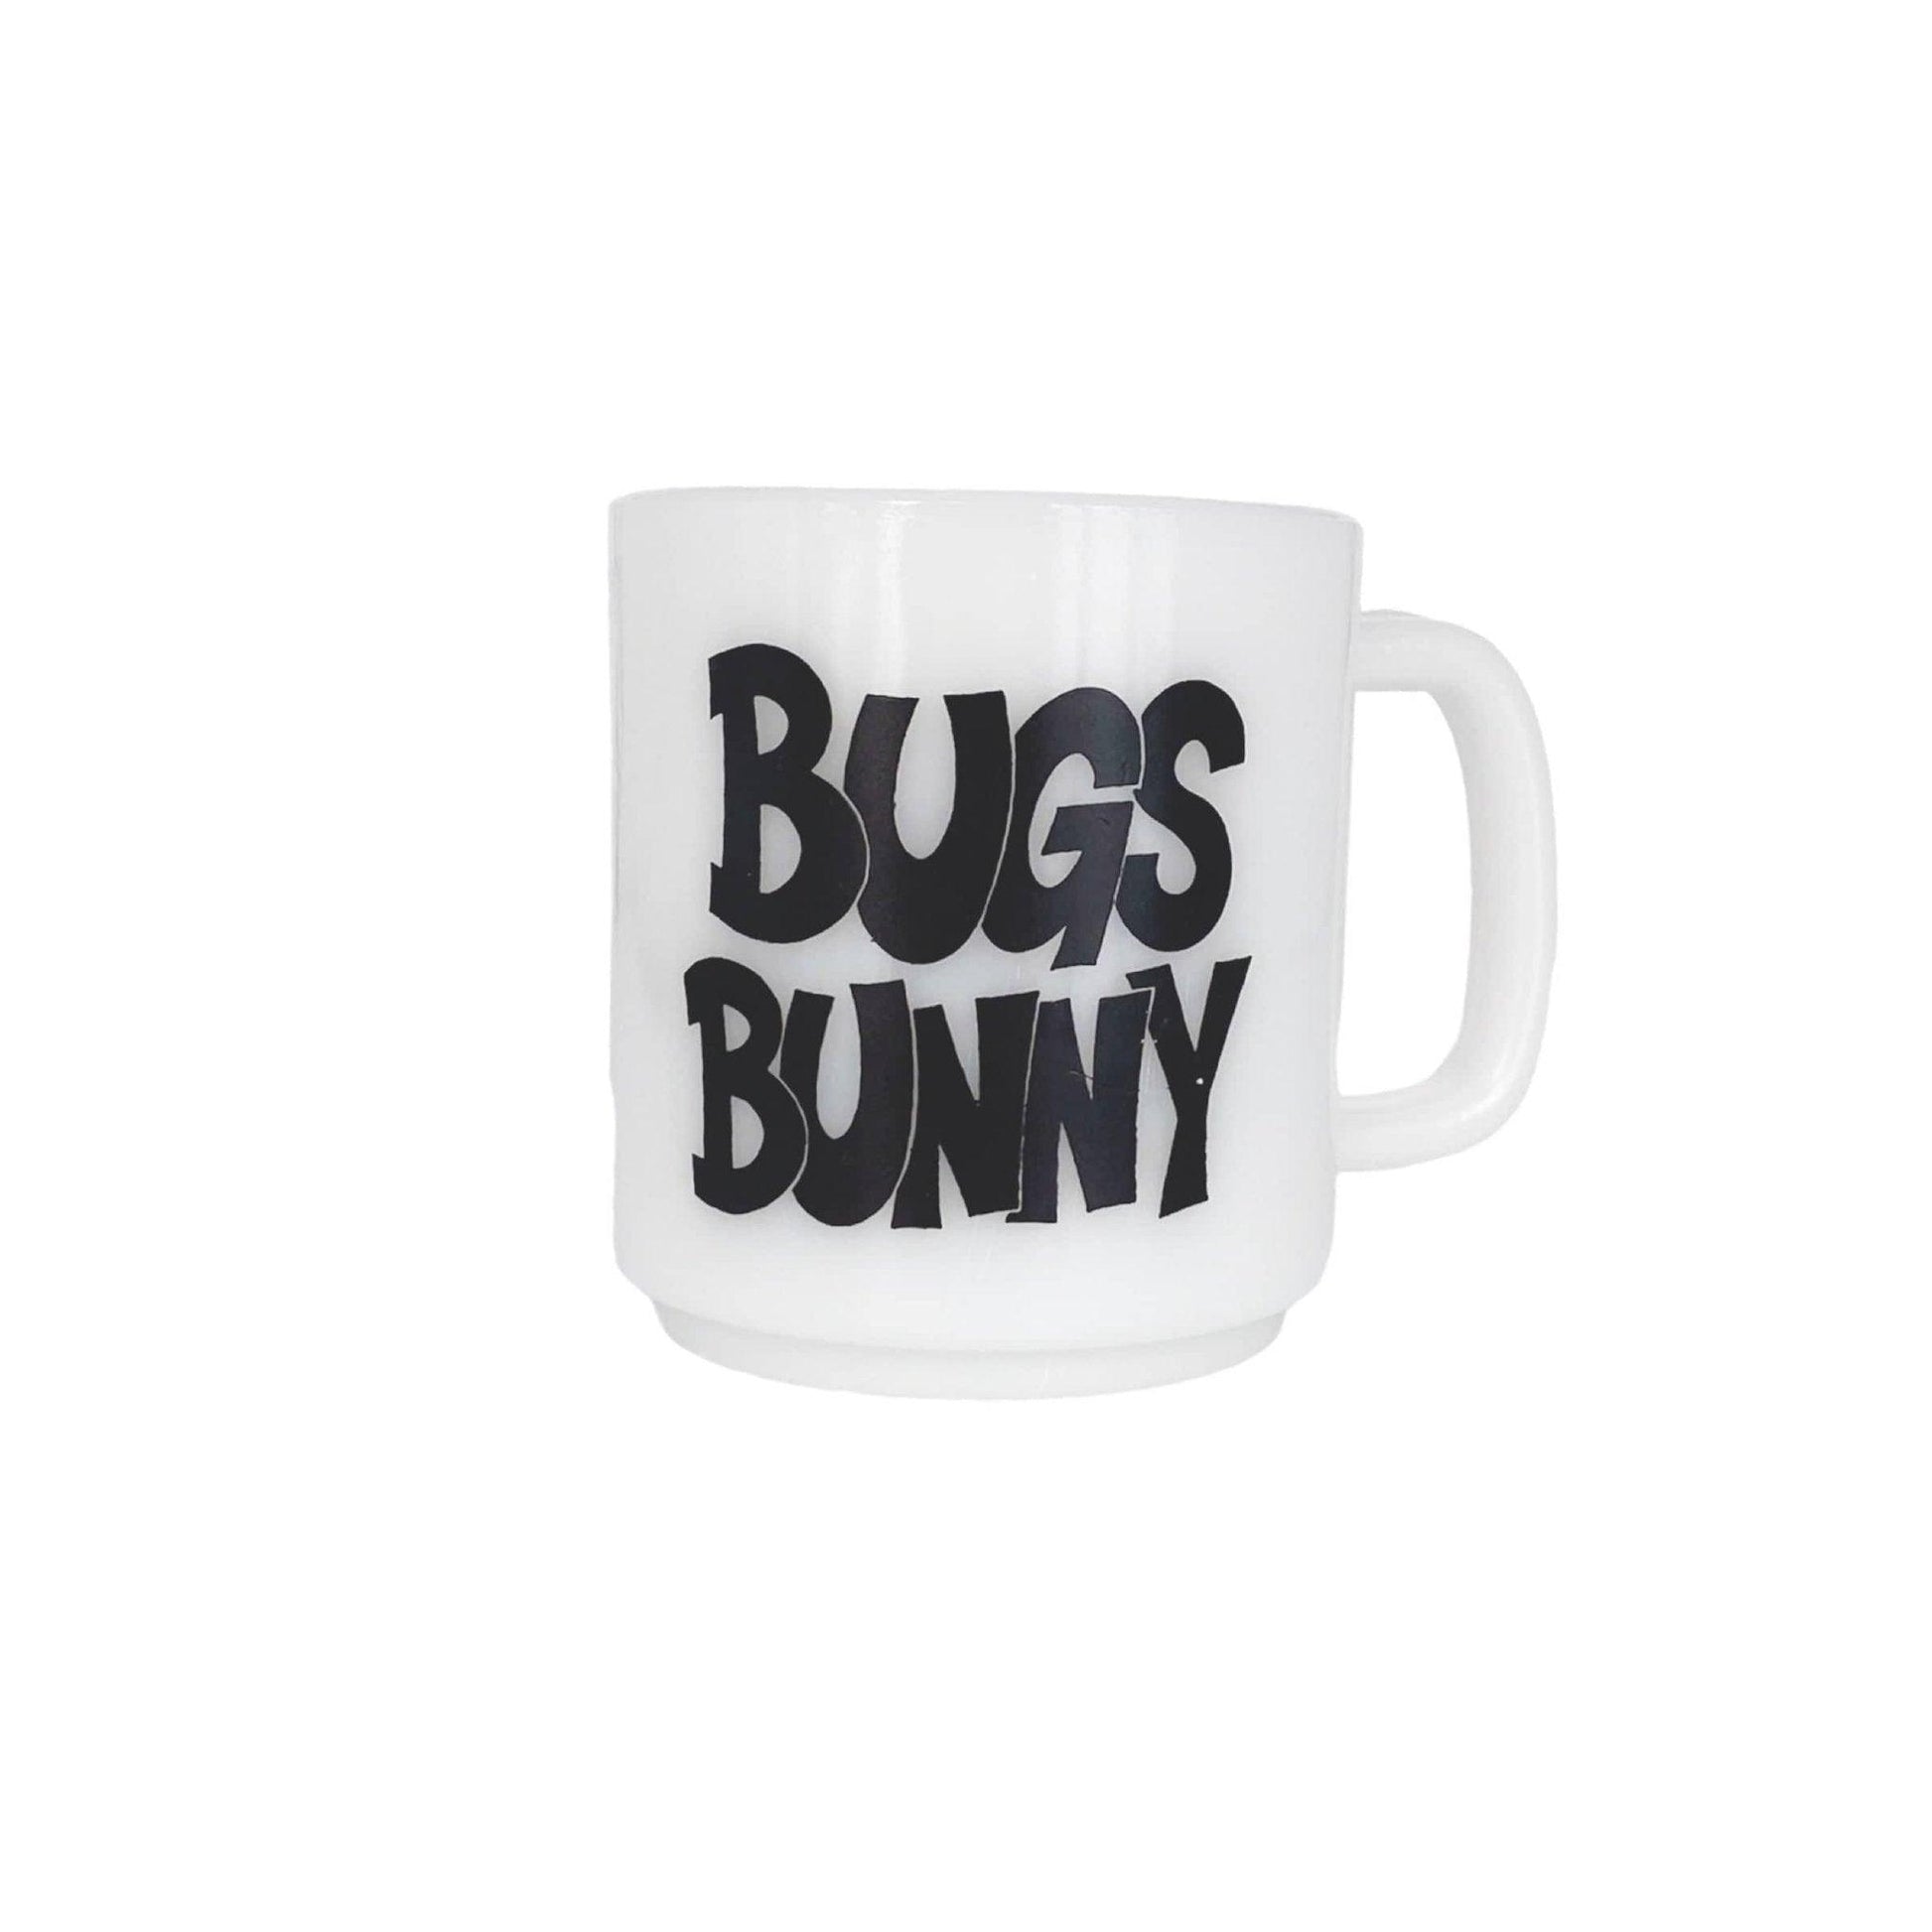 Warner Brothers Bugs Bunny Milk Glass Coffee Mug